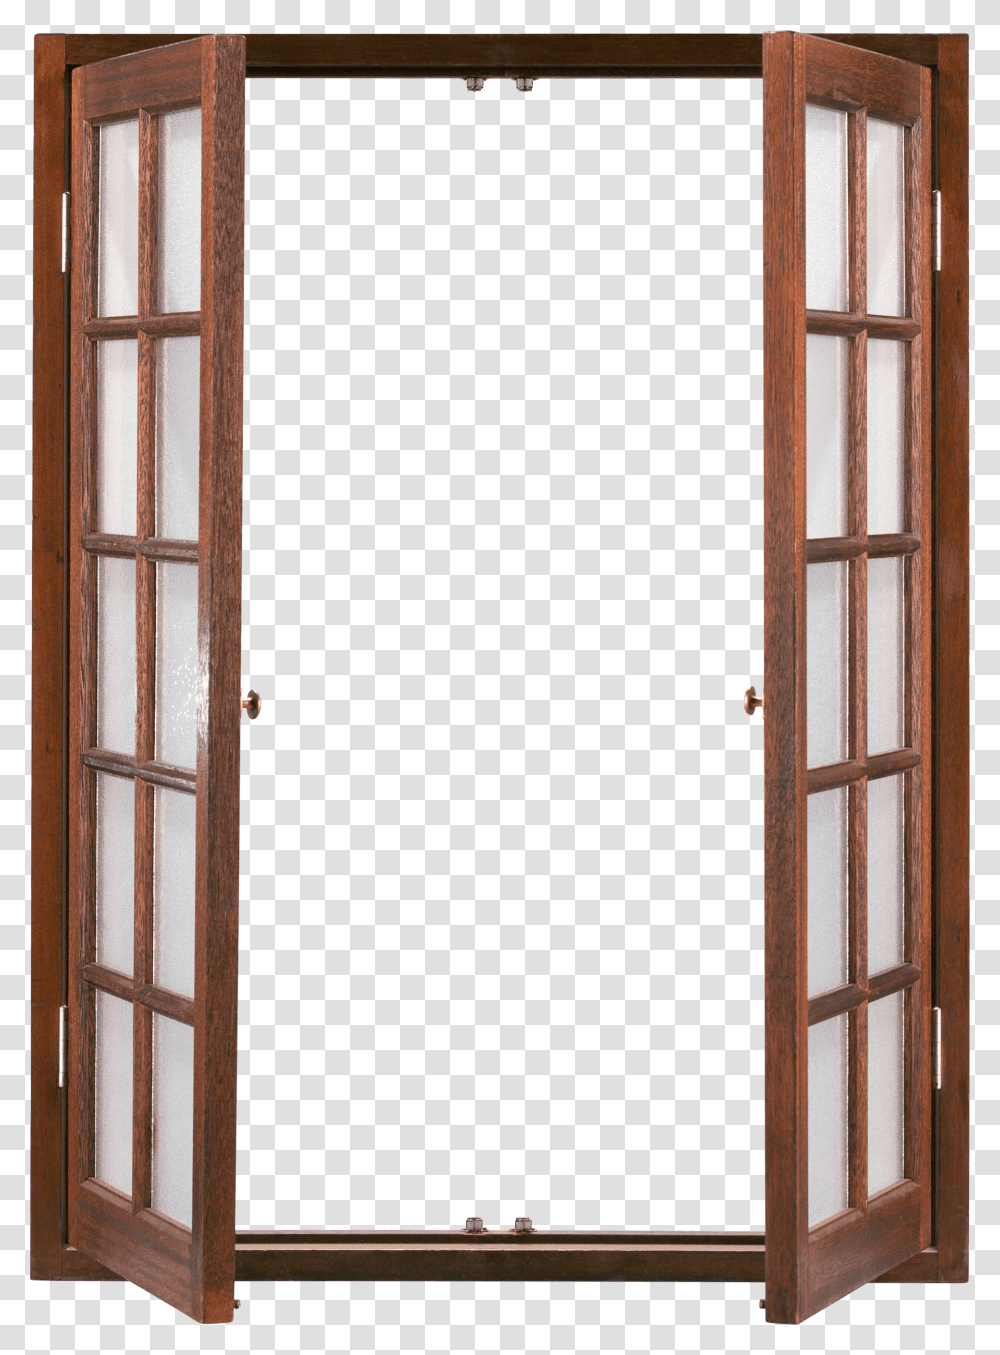 Window Images Free Download Open Window, French Door, Wood, Hardwood Transparent Png